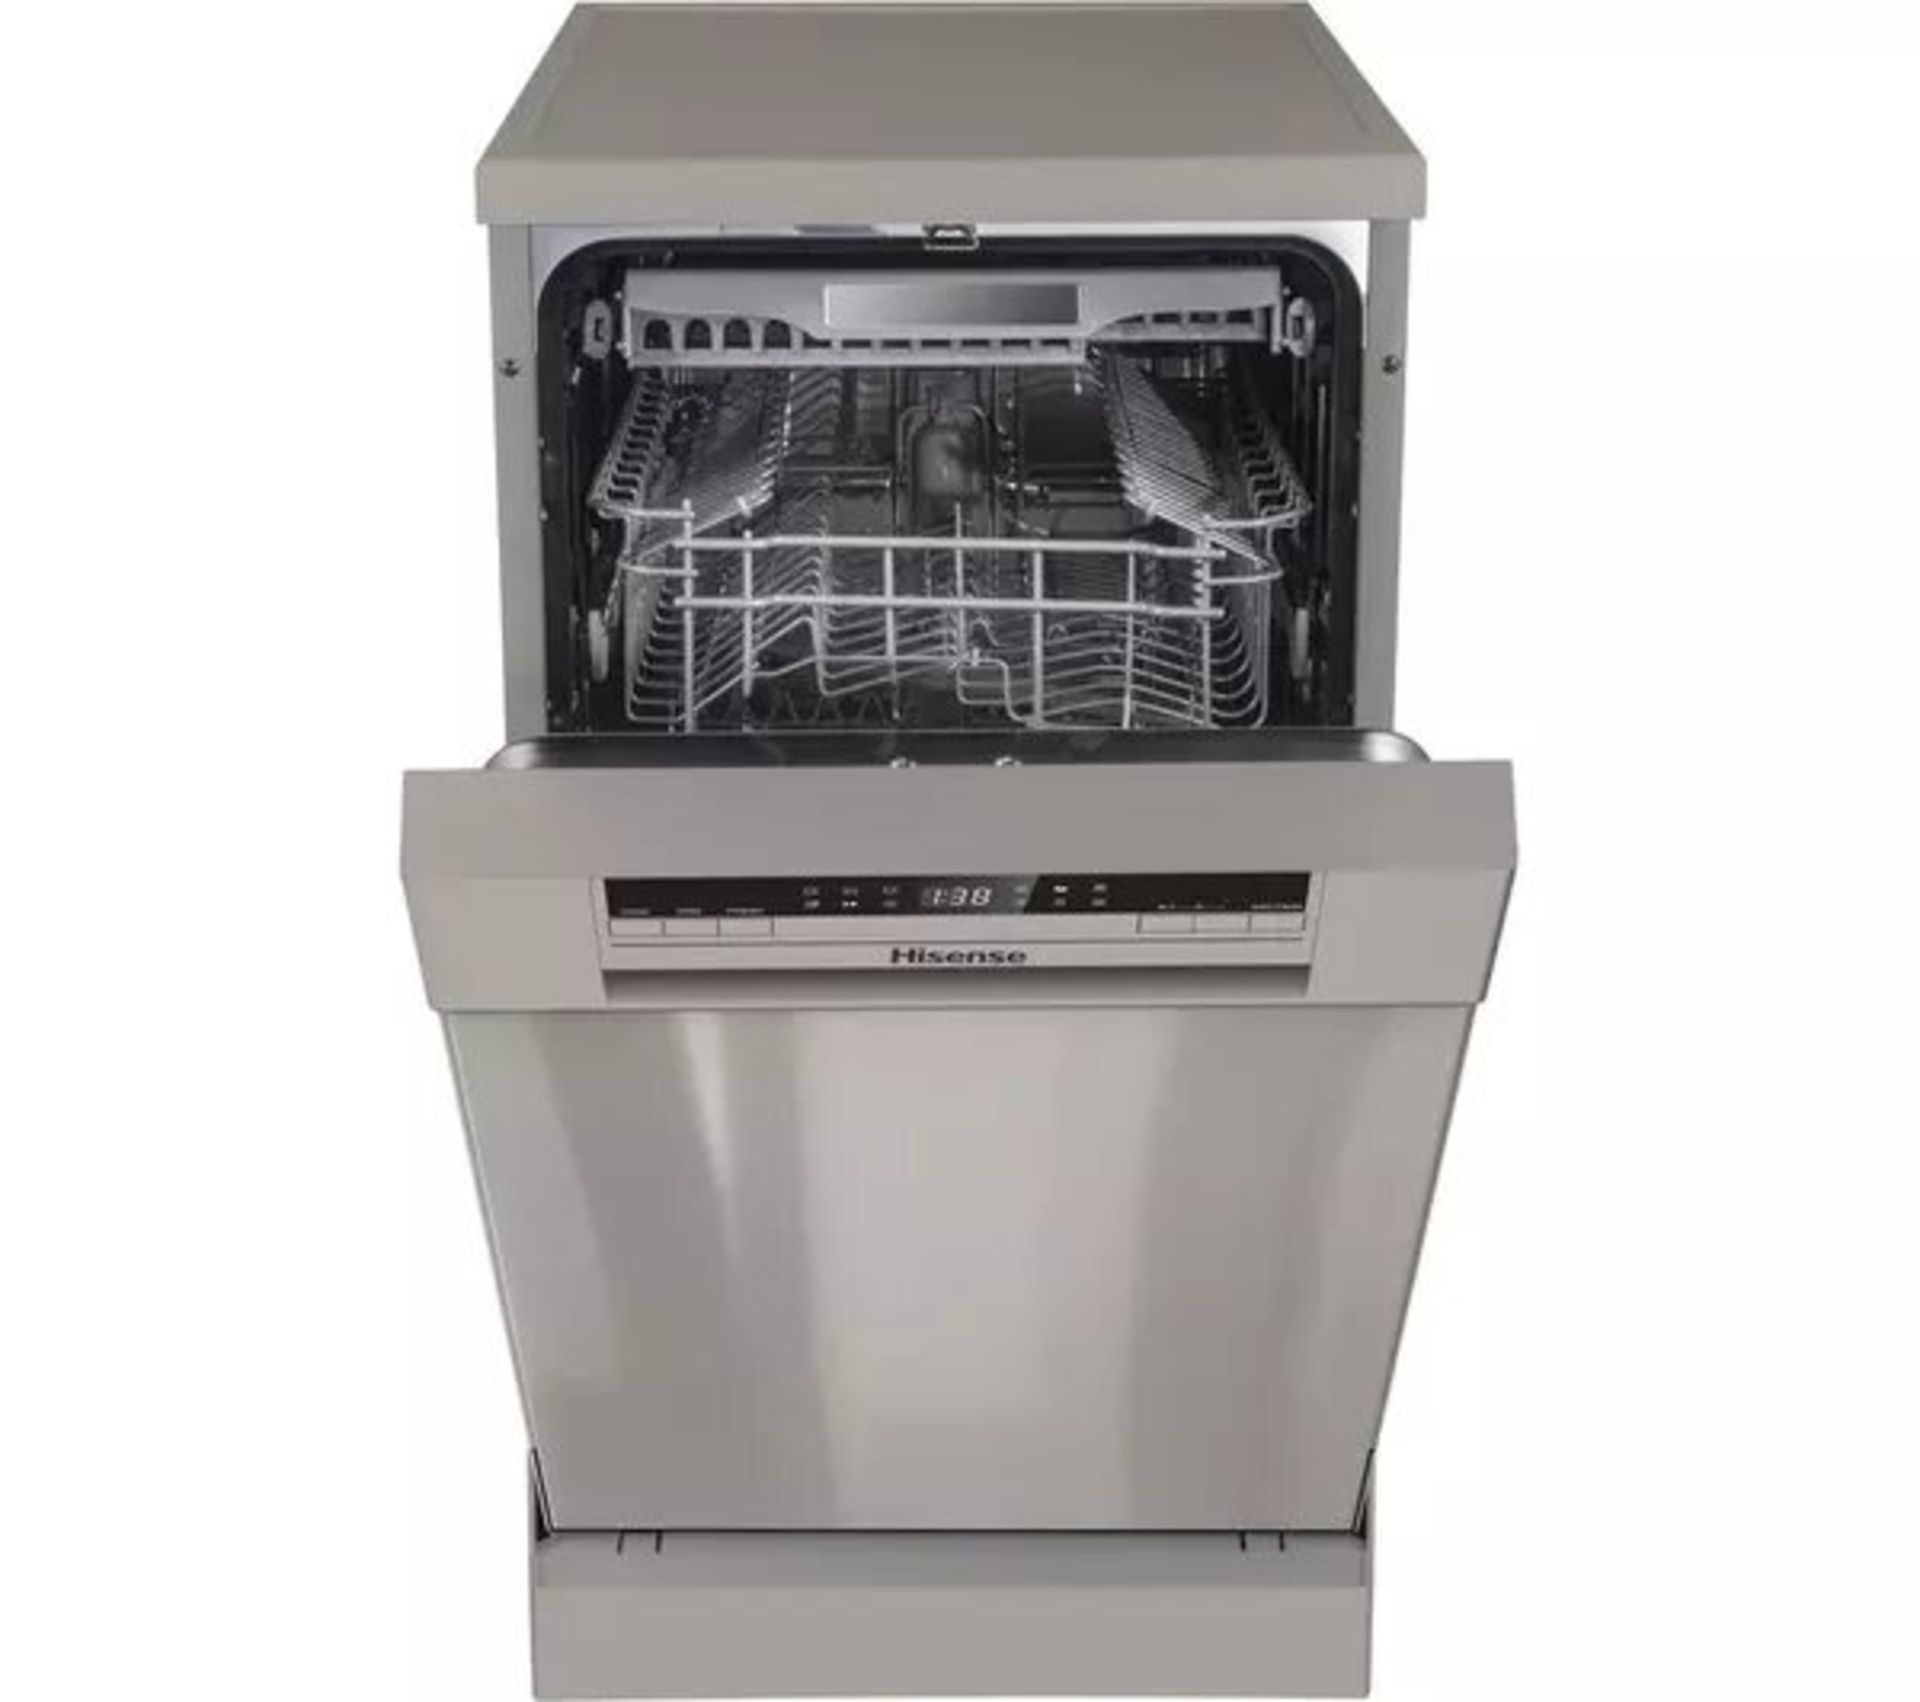 + VAT Grade B ISP £299 - Hisense HS520E40XUK Slimline Dishwasher - 11 Place Settings - 40 Minute - Image 2 of 3